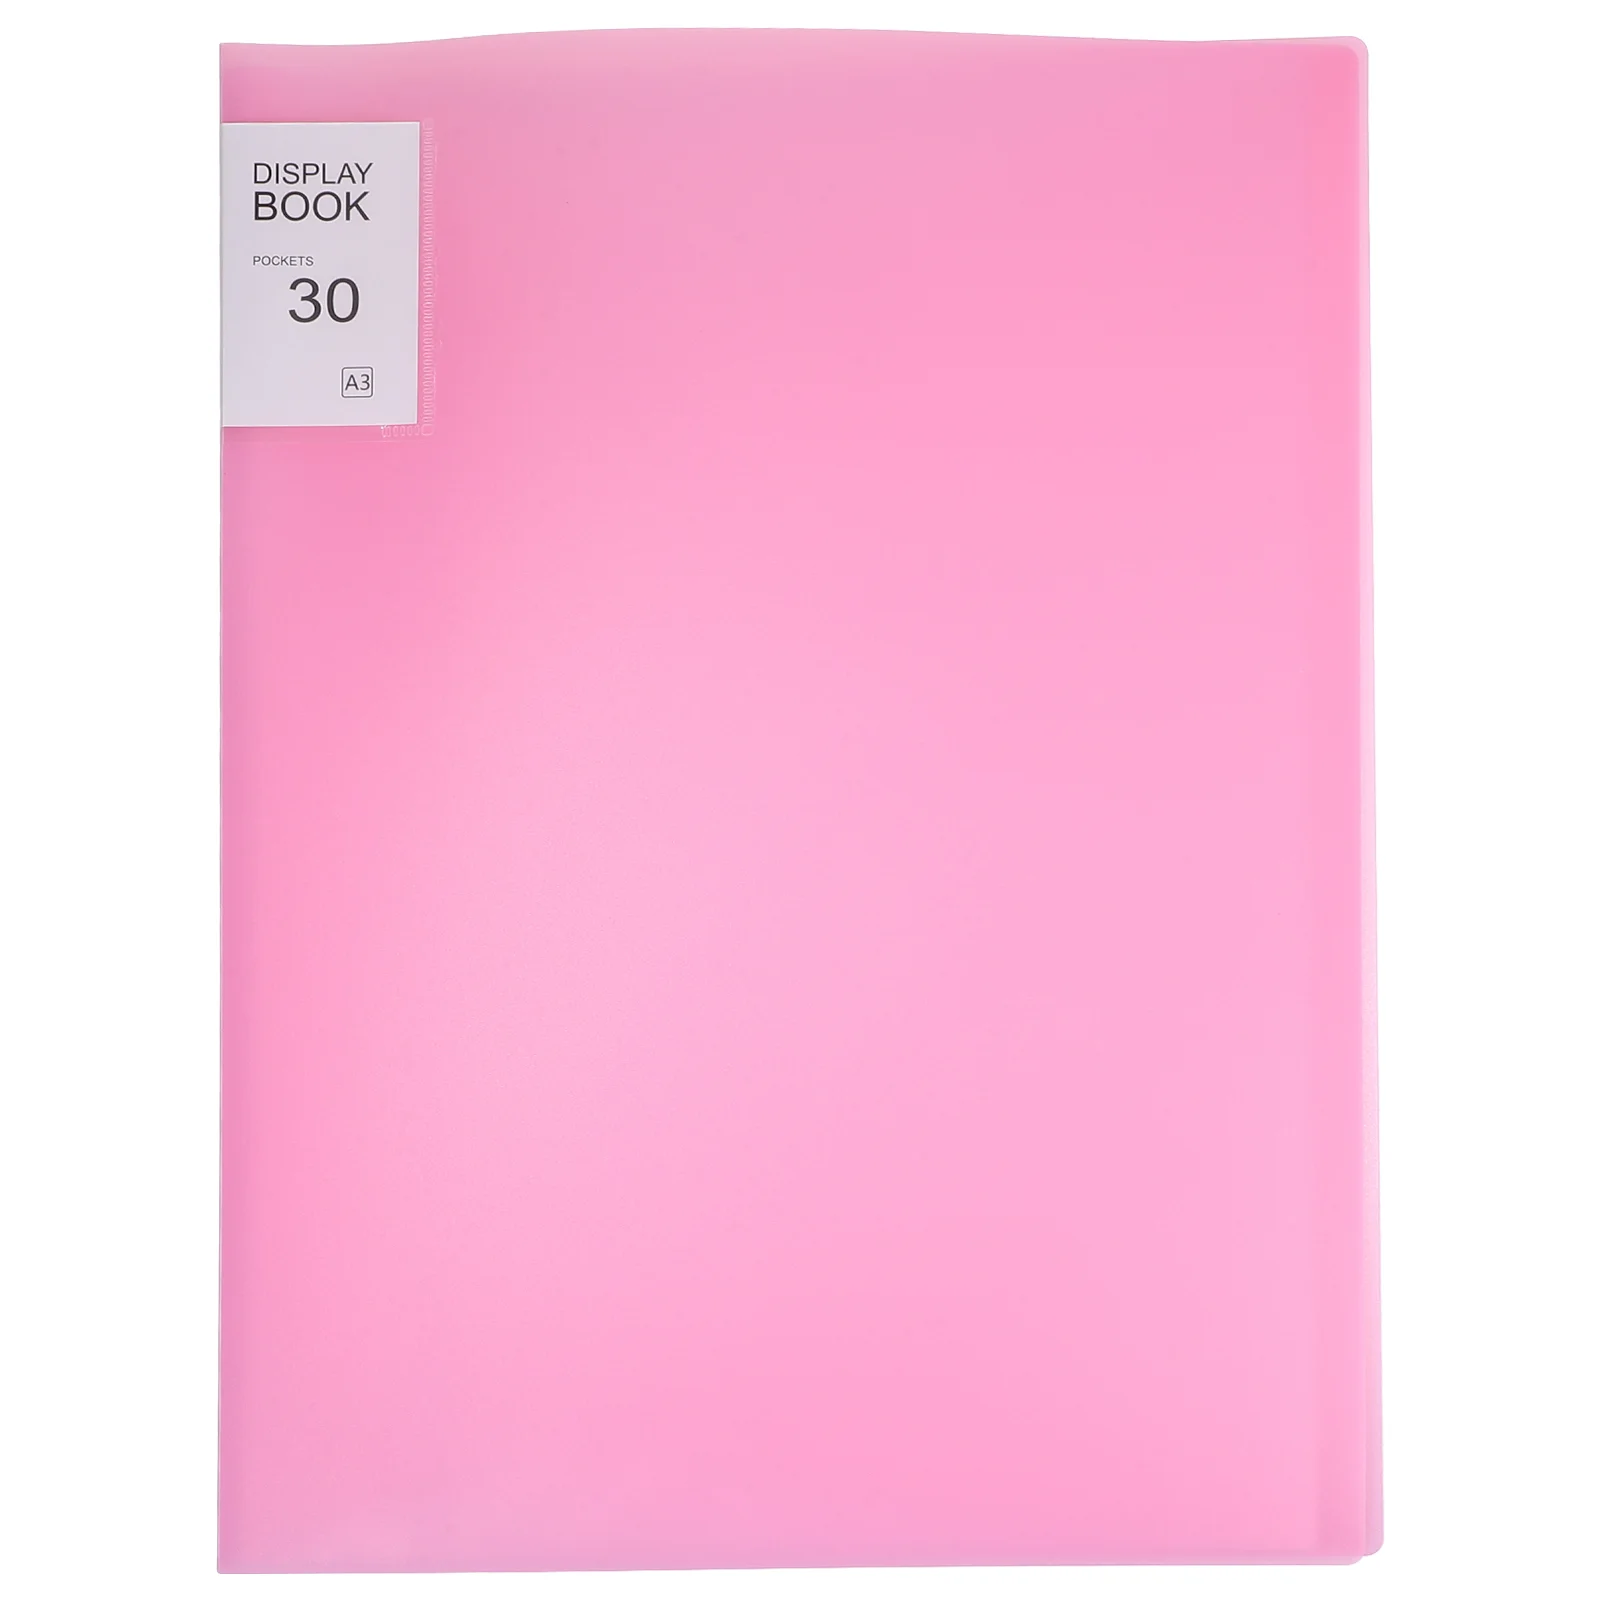 

30 Pages Insert Folder Presentation Folders Book with Clear Sleeves Posters Portfolio Case for Artwork Binder Pocket Large A3